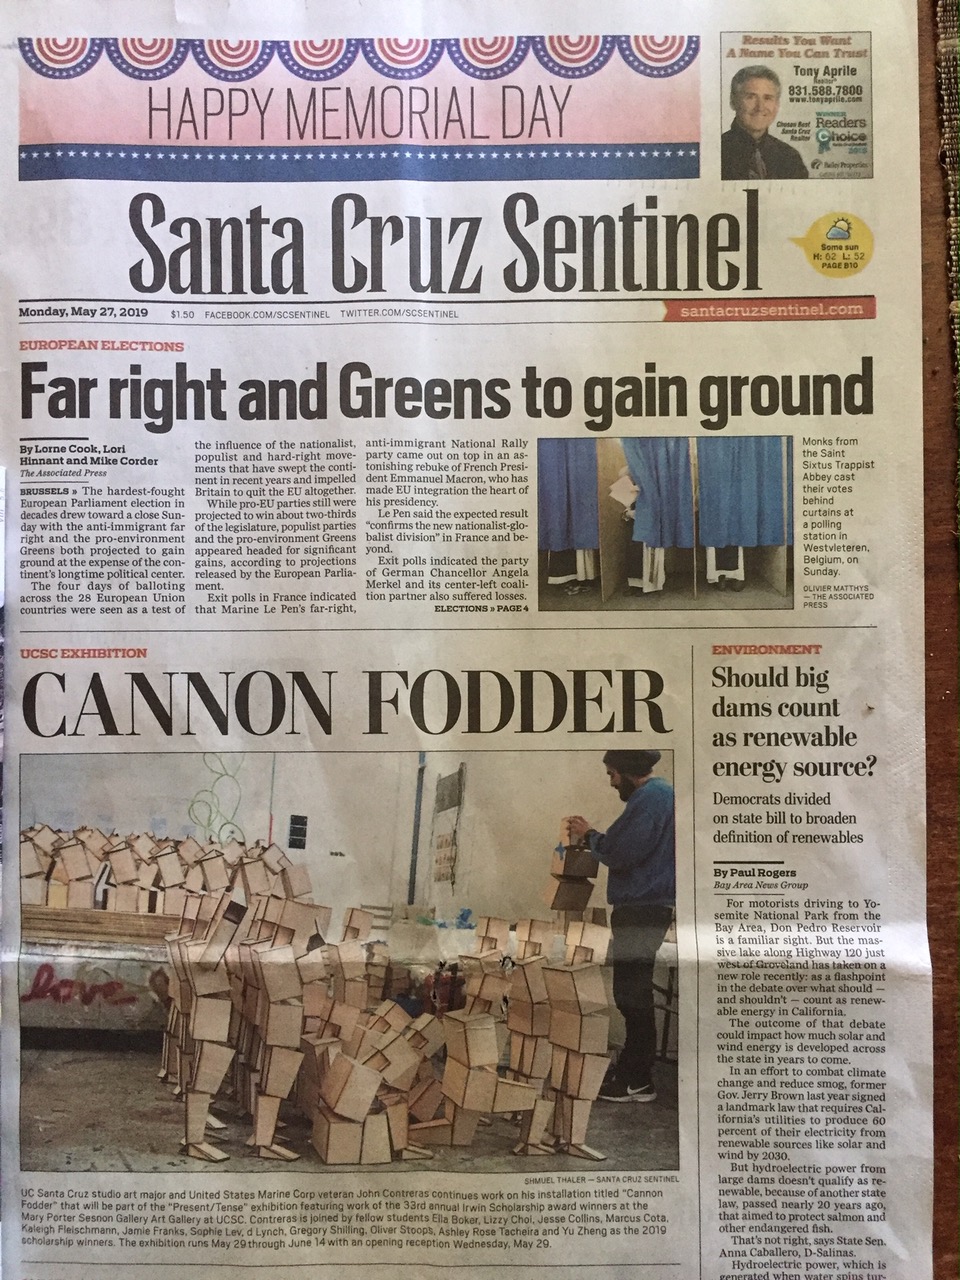 sentinel newspaper santa cruz